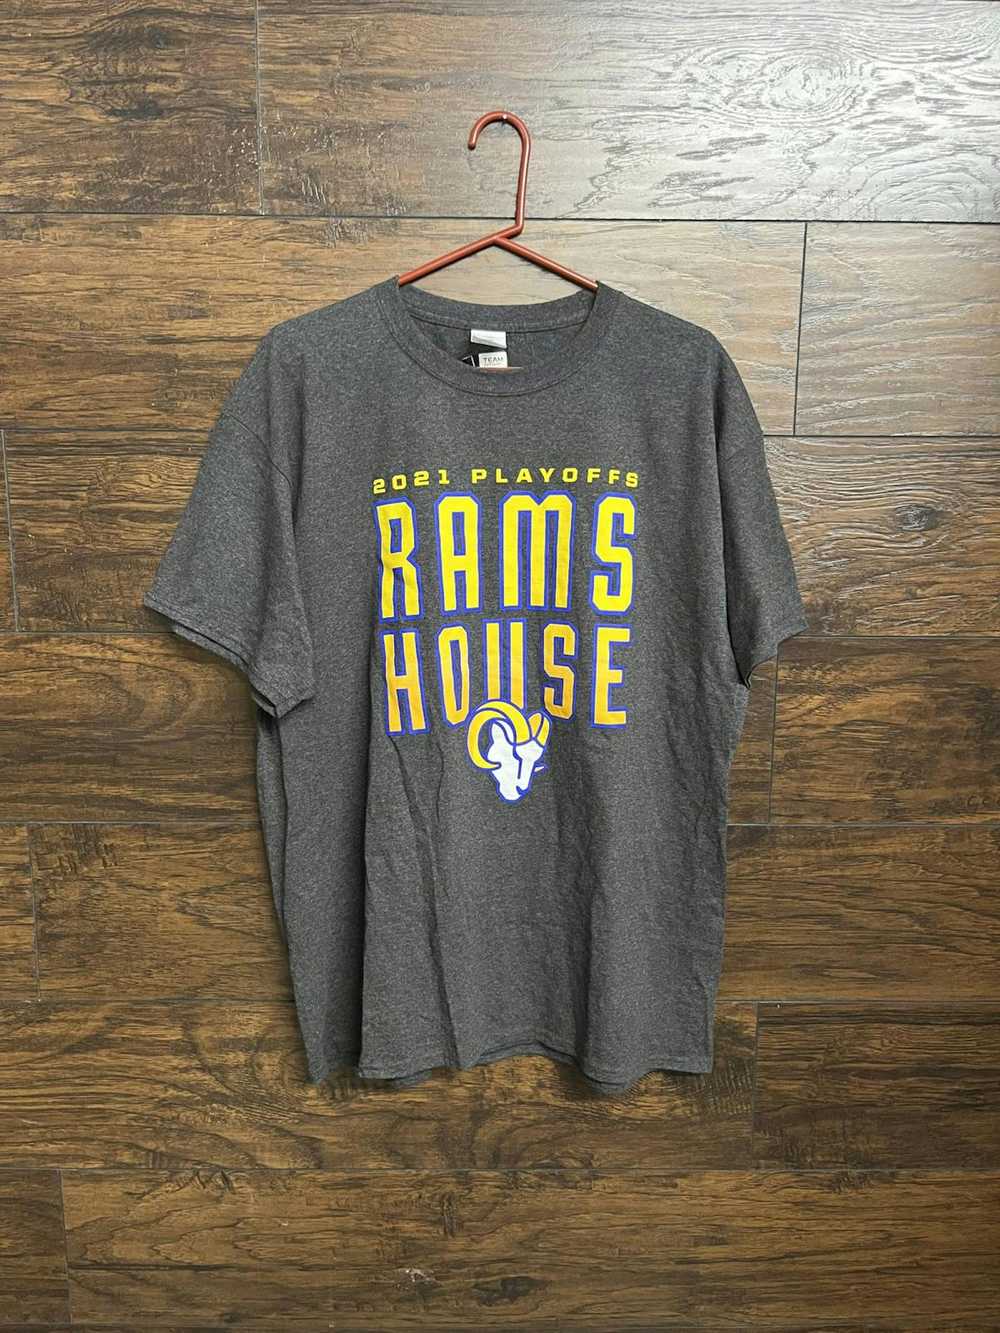 NFL NFL LA Rams House 2021 Playoffs - XL T-shirt - image 1